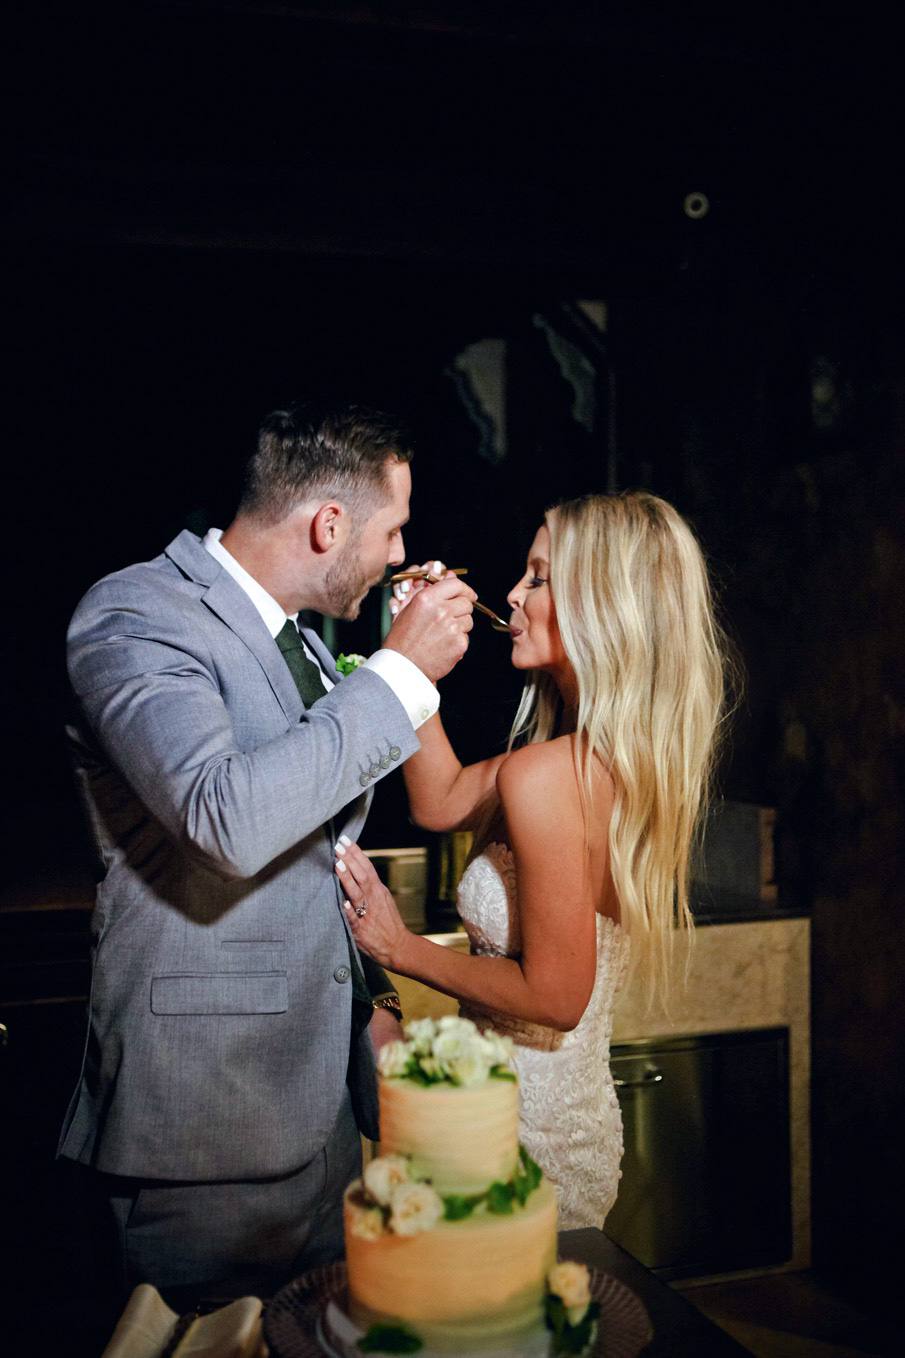 couple eating wedding cake